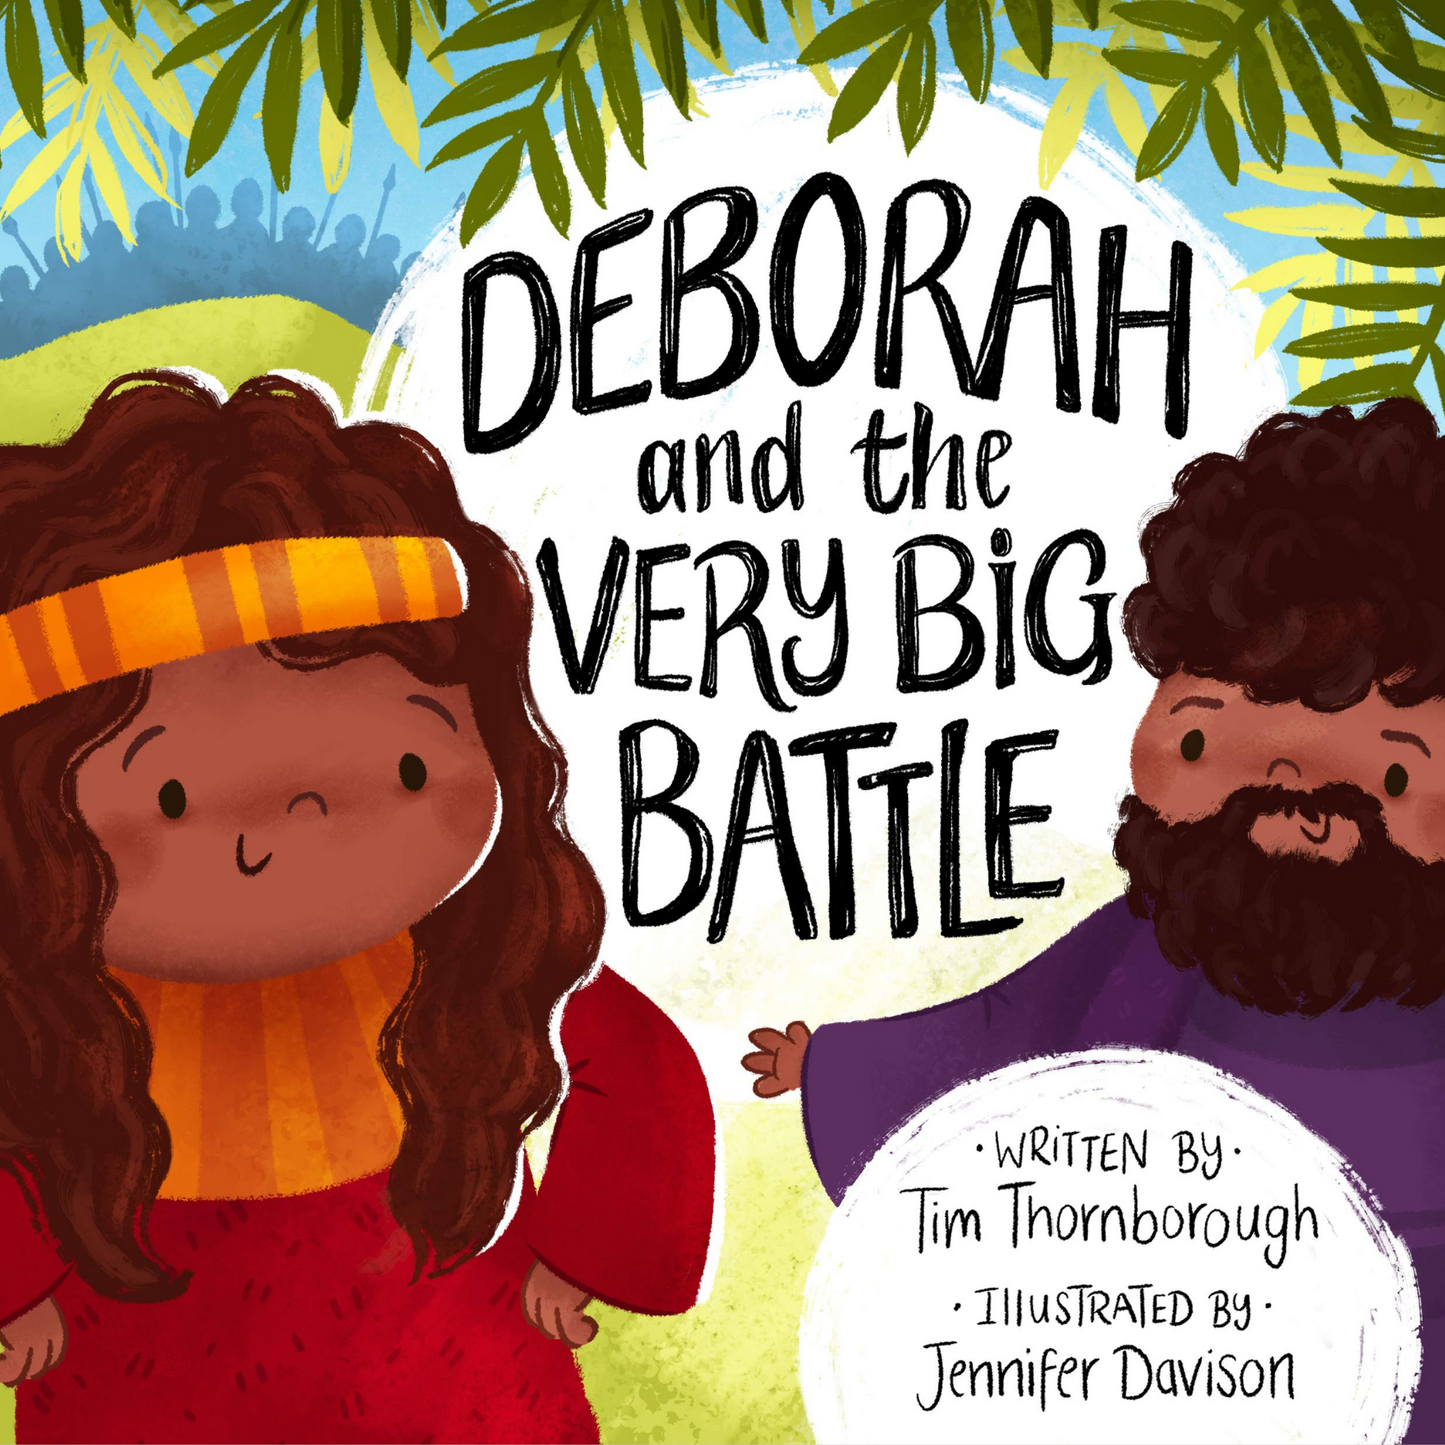 Deborah and the very big battle